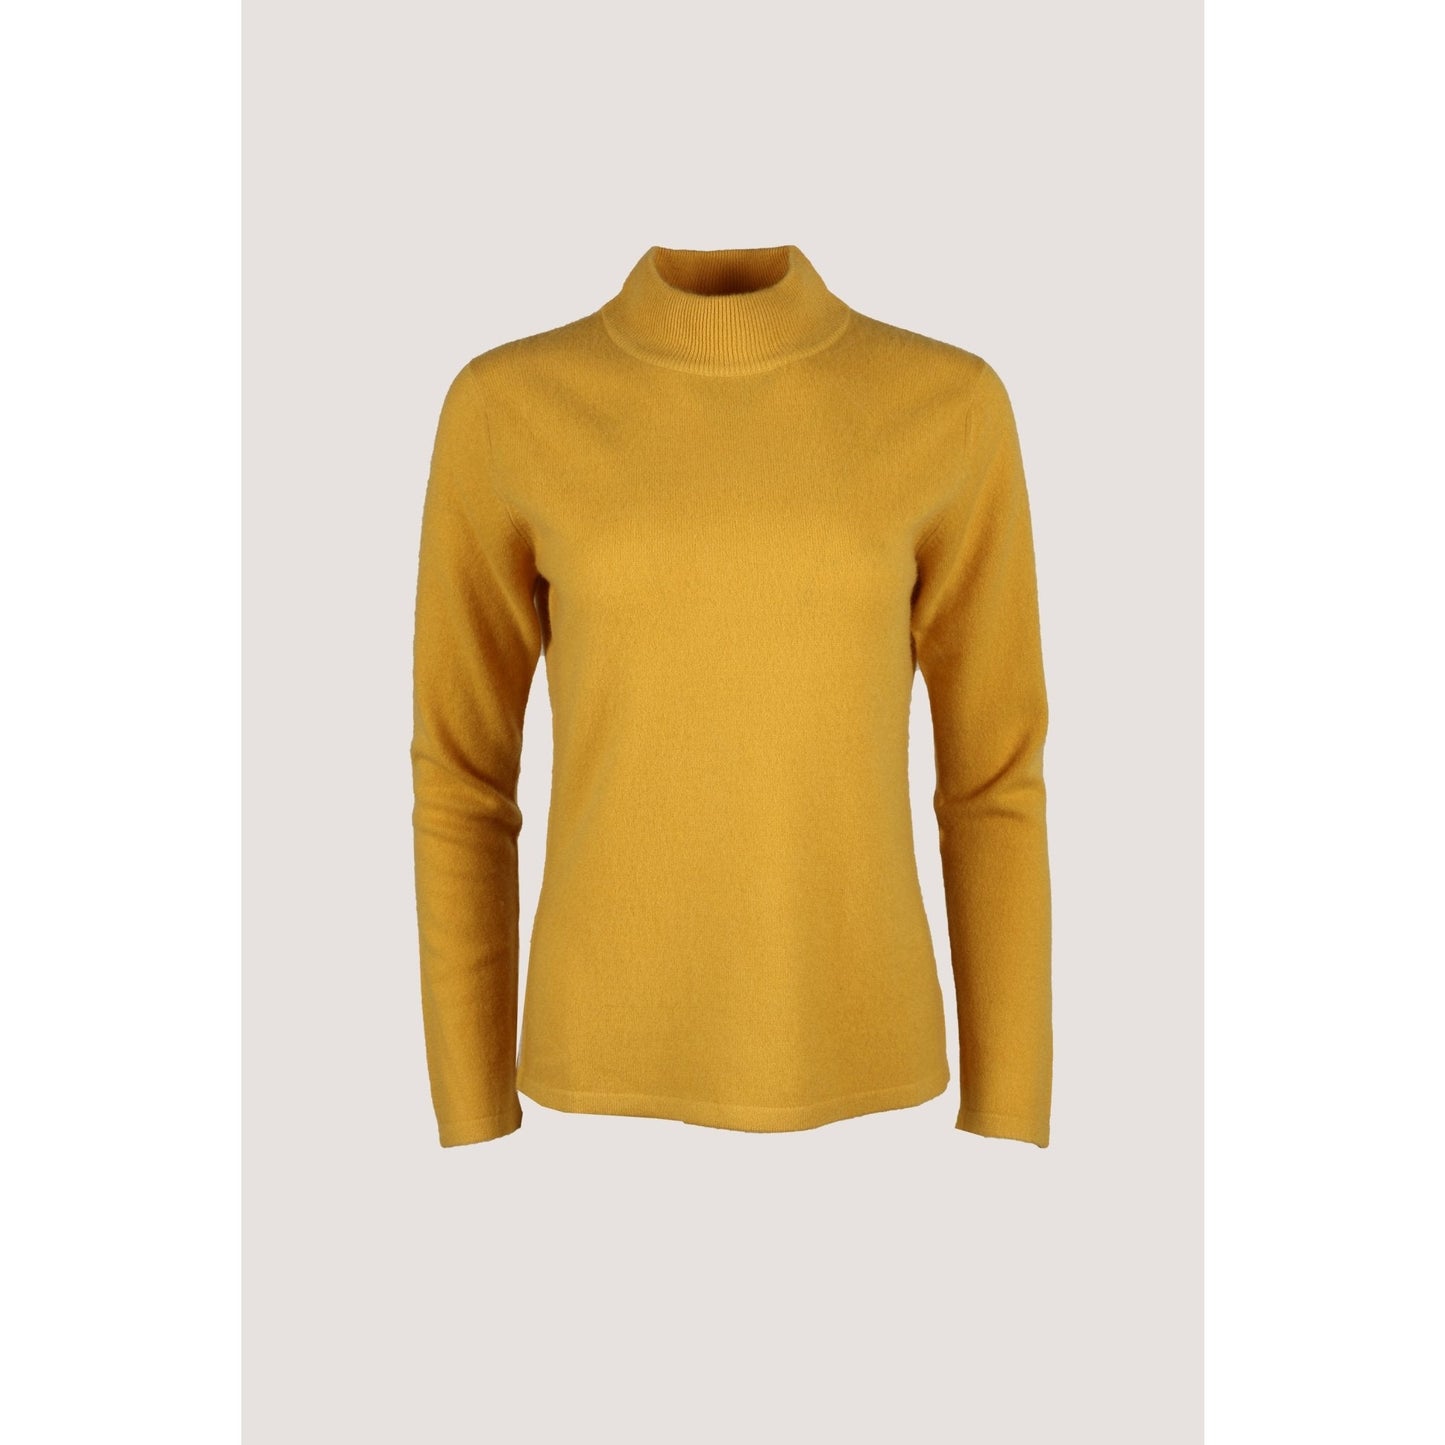 Half Roll Neck Sweater Yellow - Crumpet Chowk